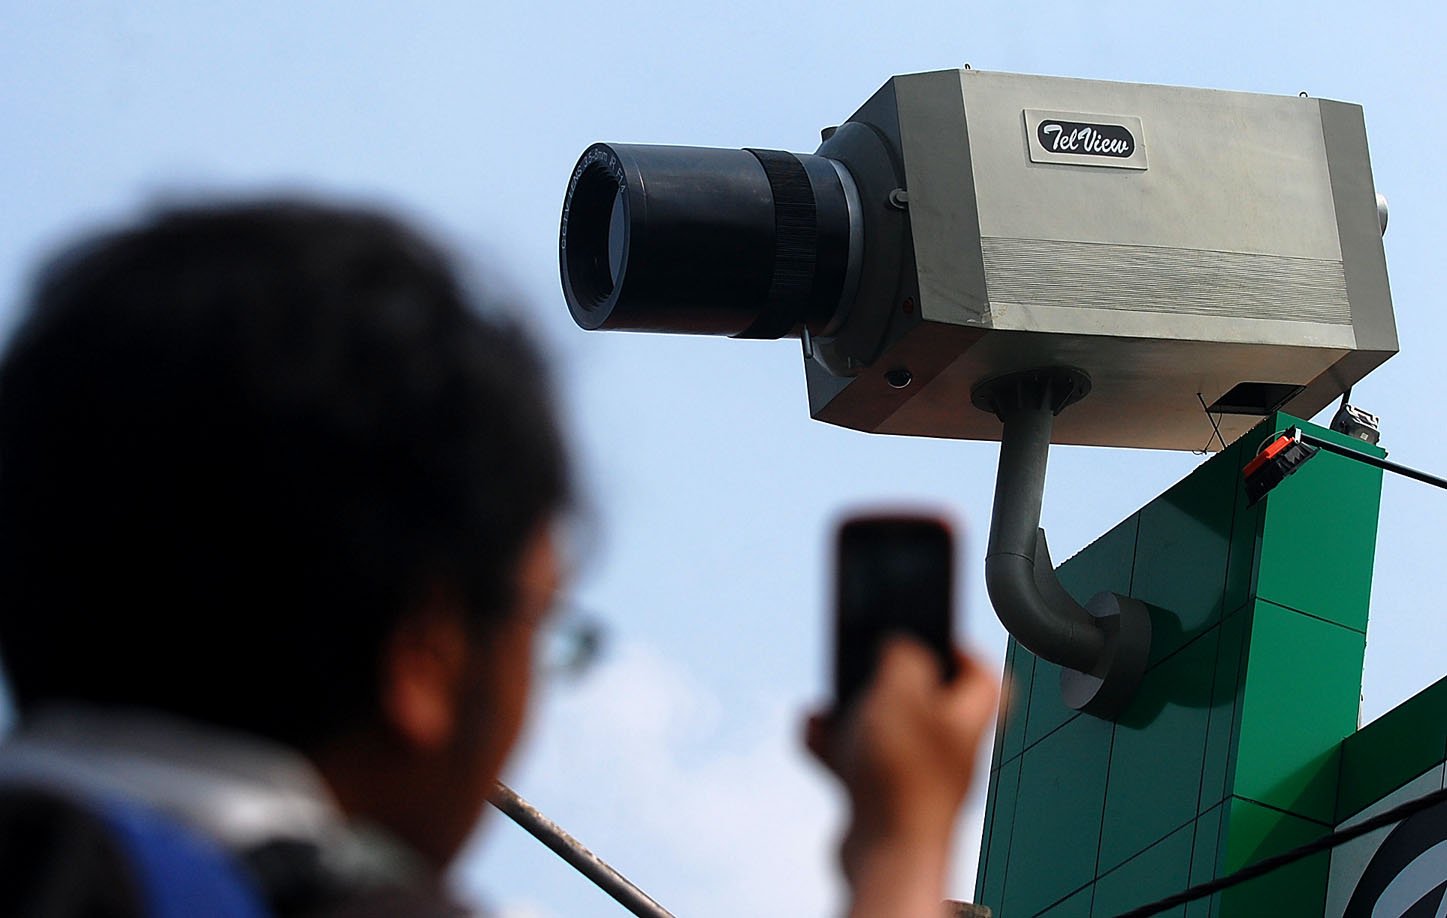  FOTO: CCTV raksasa di Bandung masuk rekor MURI